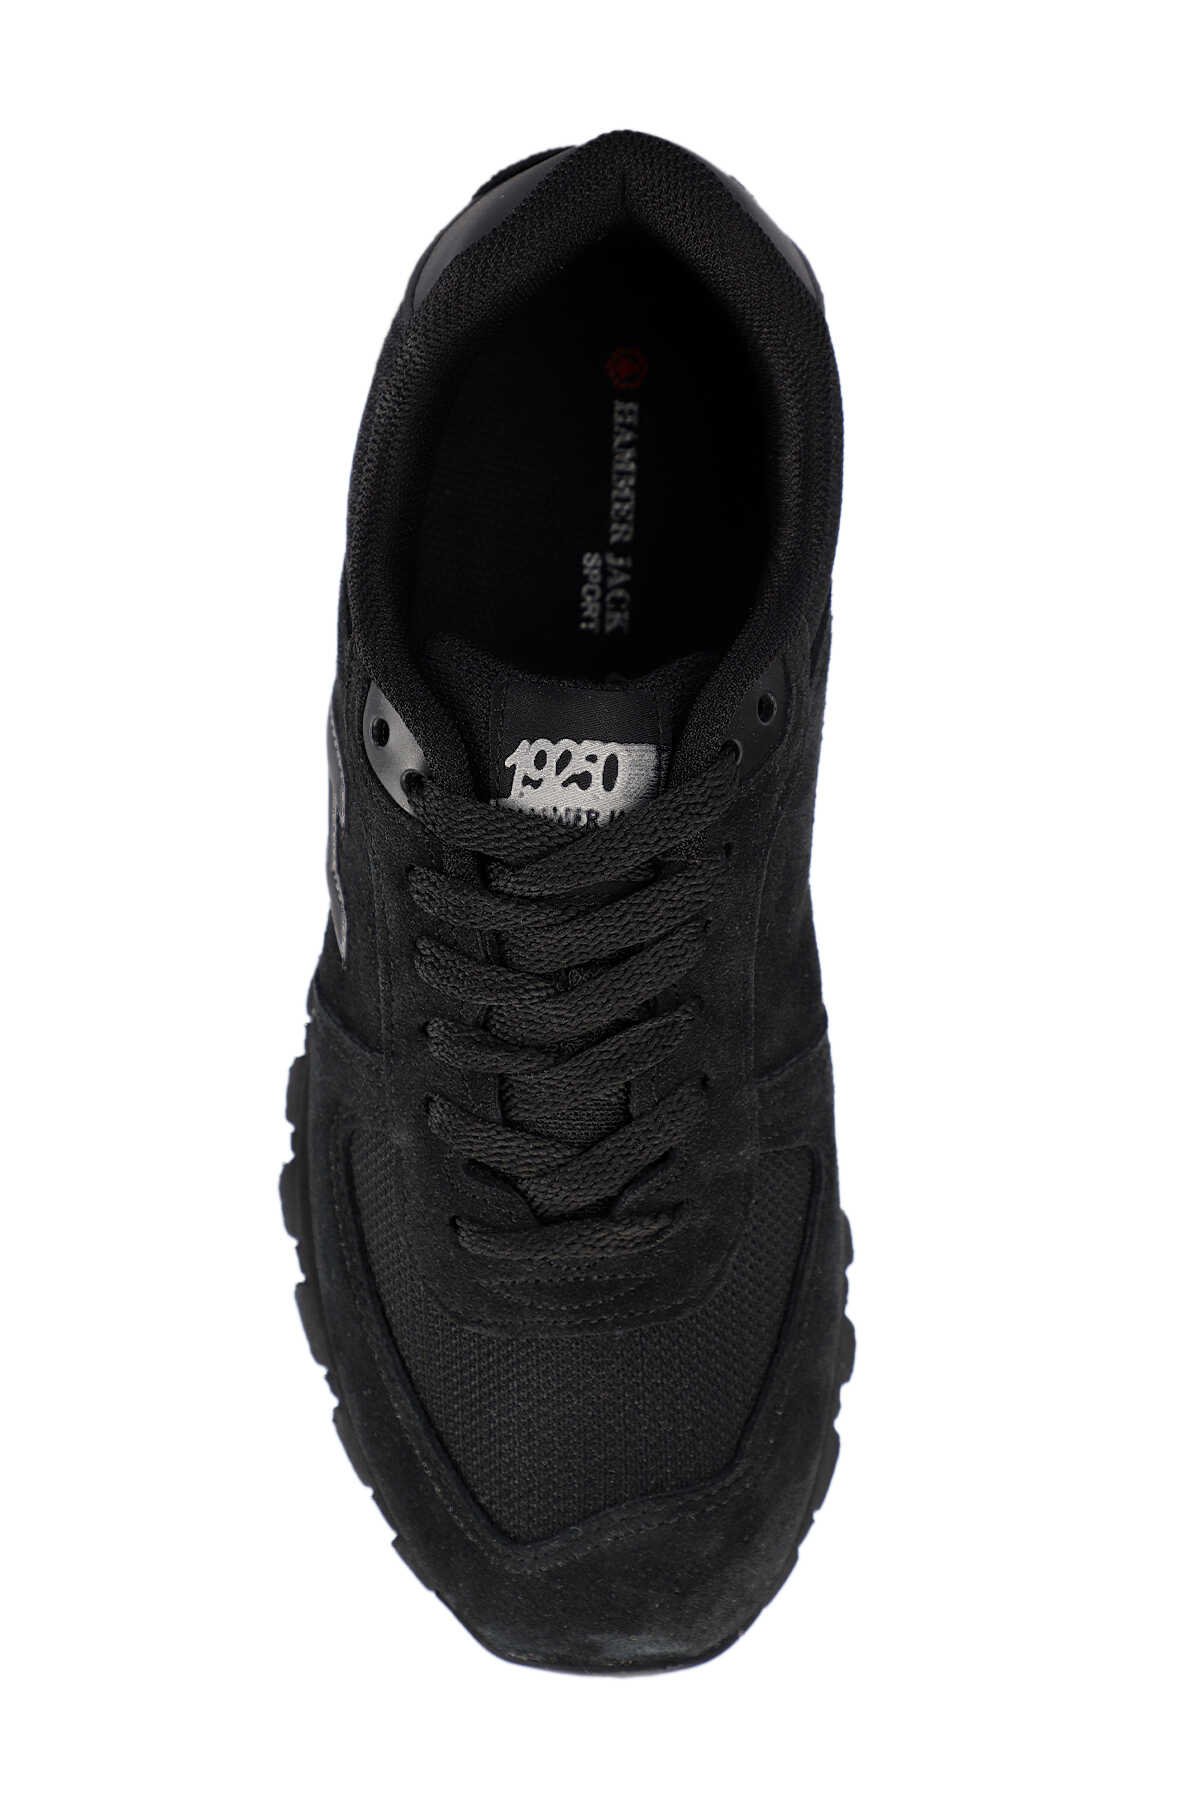 Hammer Jack PERU Sneaker Kadın Ayakkabı Siyah / Füme